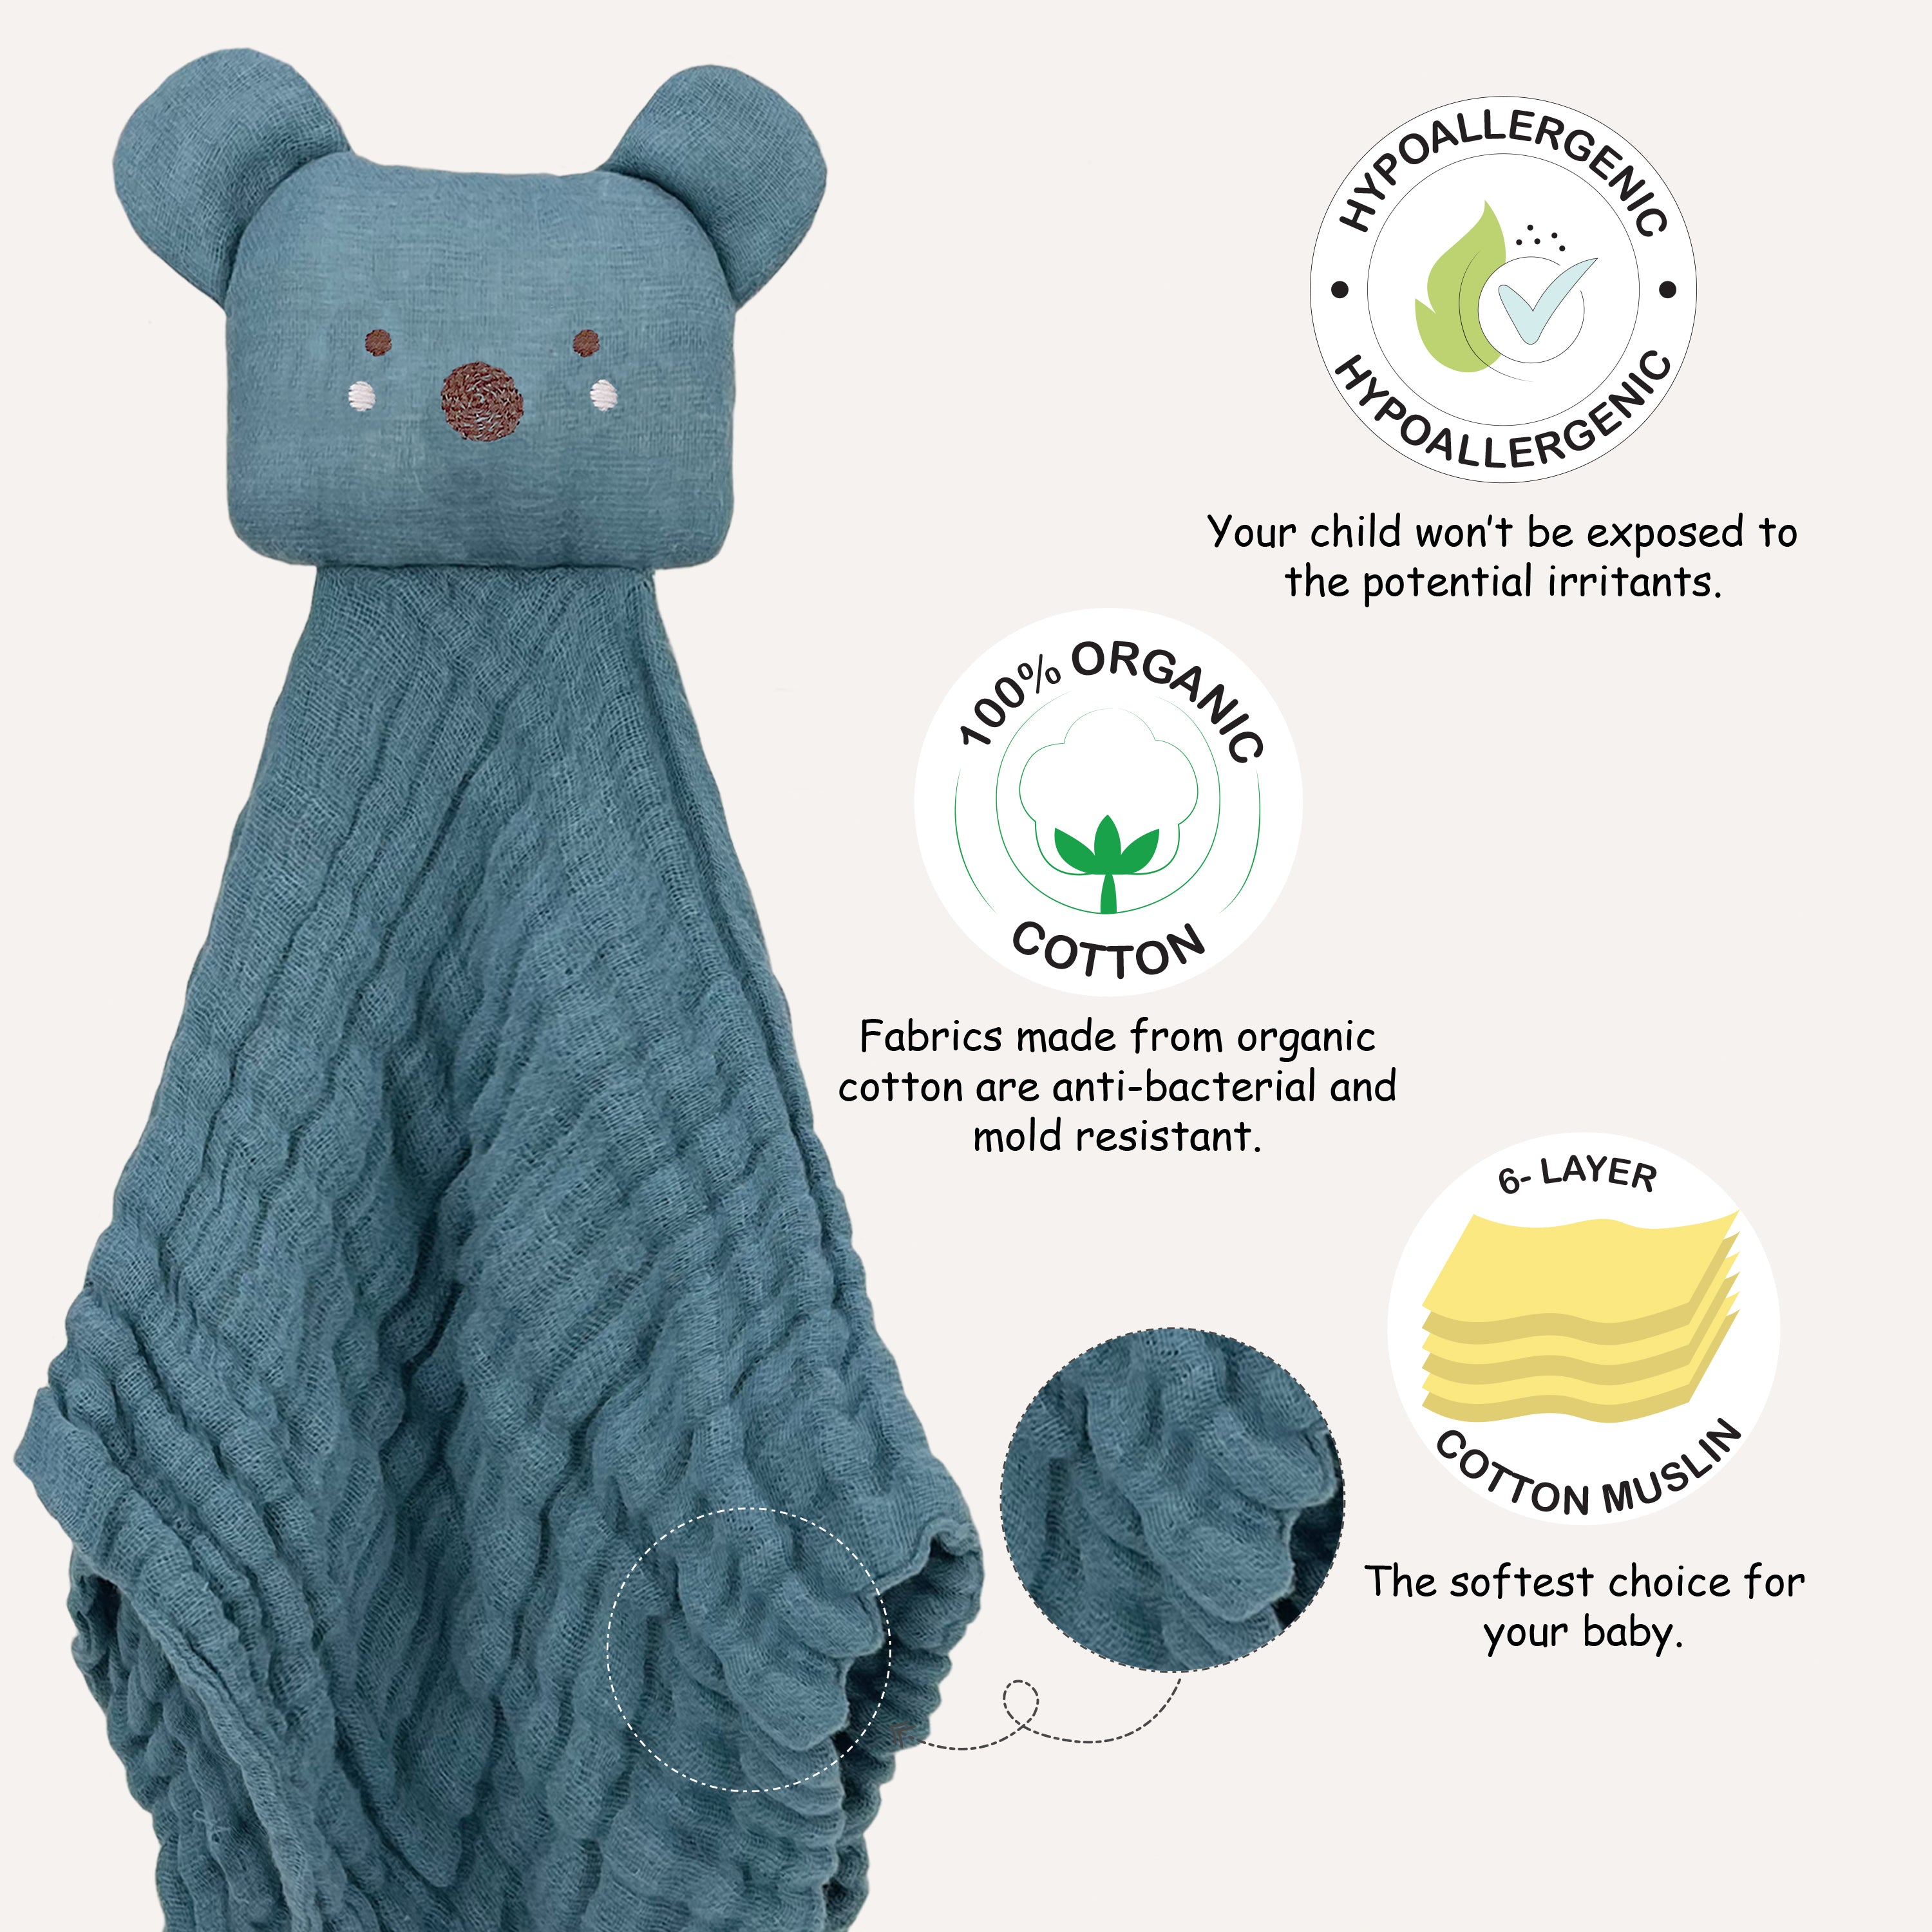 Abracadabra Organics Collectible Security Blanket With Cuddle Toy - Koala Bear